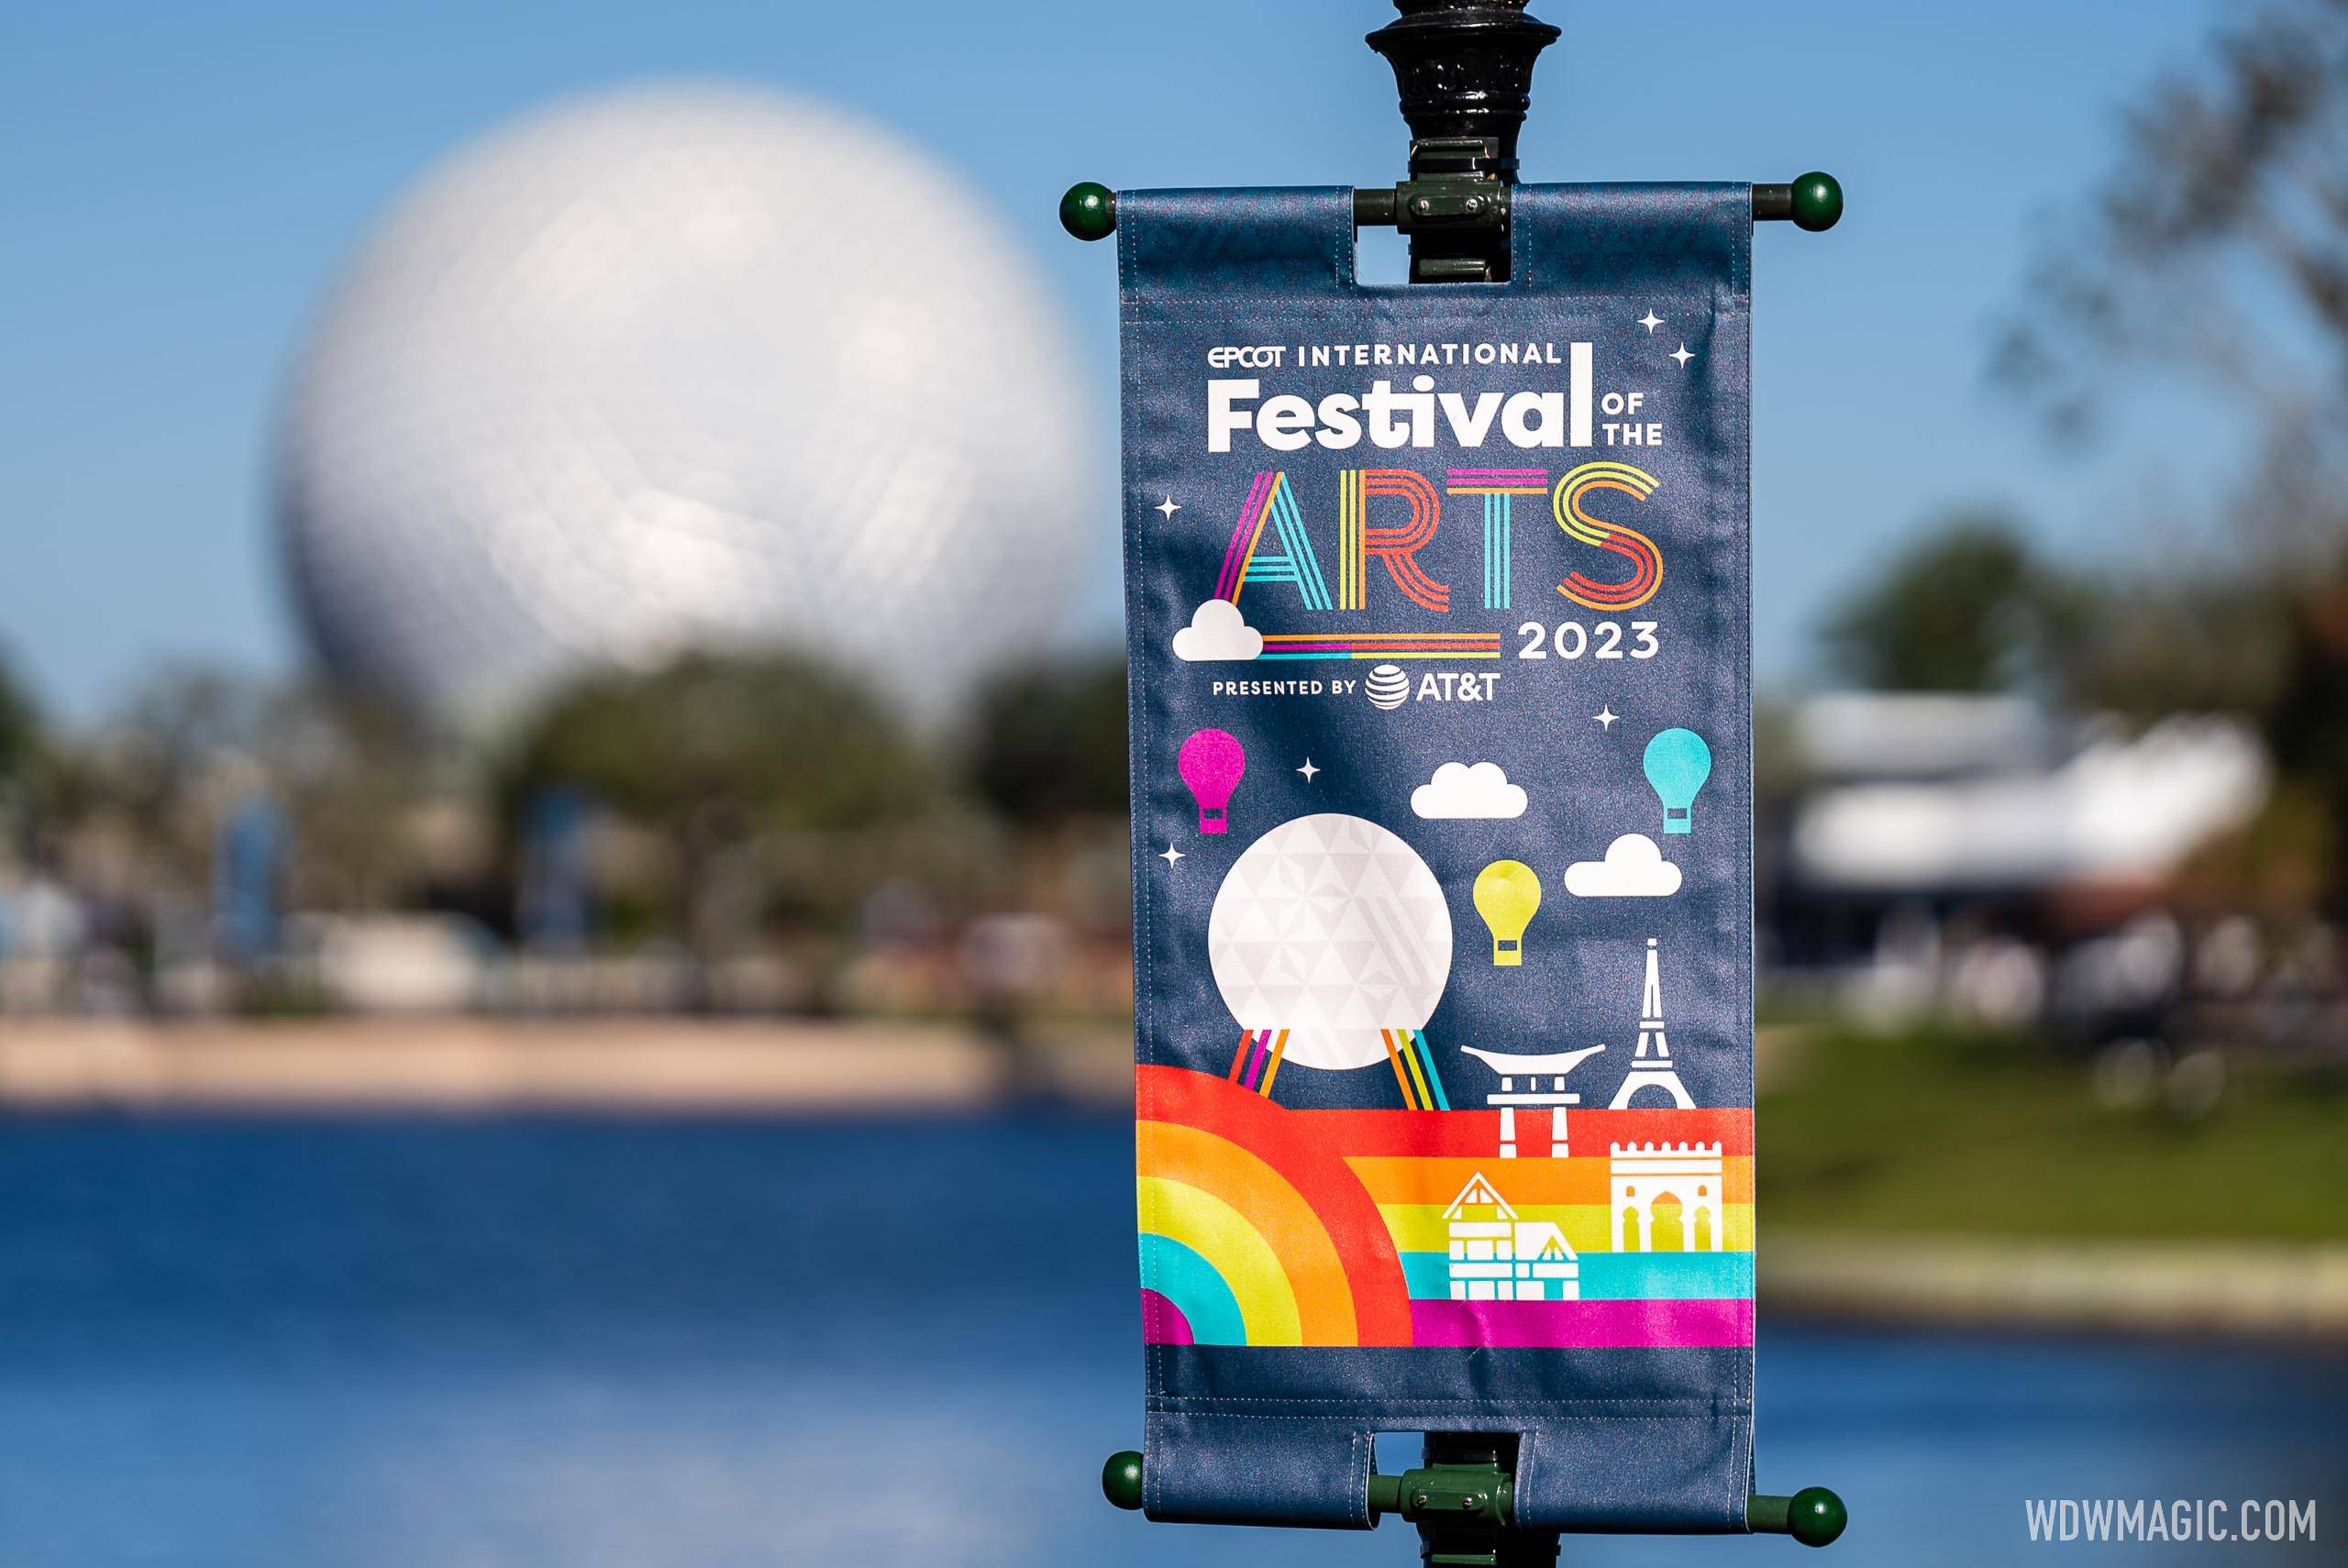 2023 EPCOT International Festival of the Arts signage